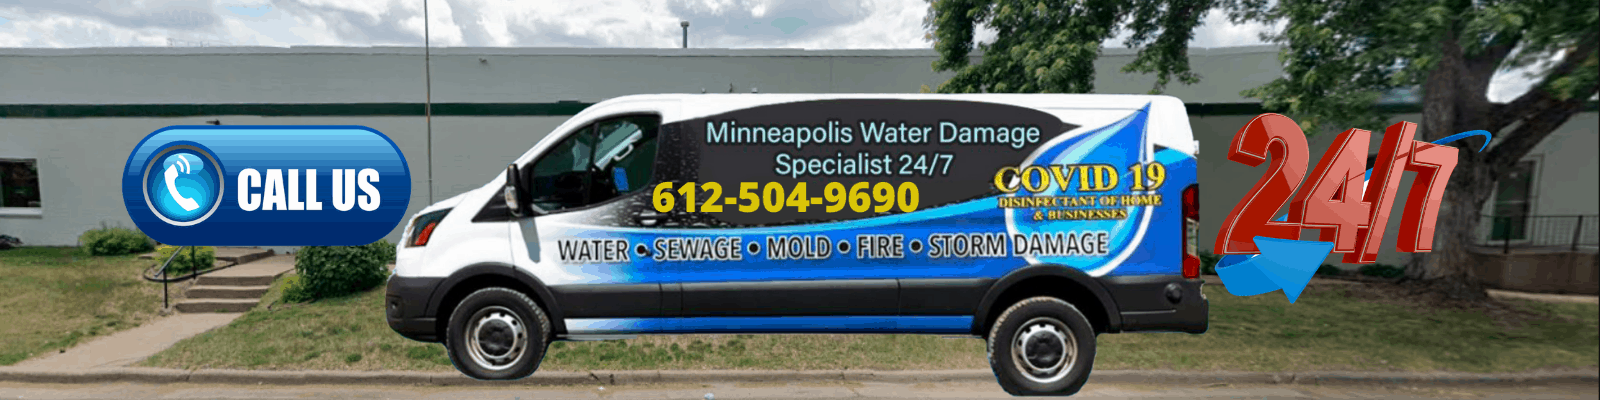 Minneapolis Water Damage, Water Damage Minneapolis, Commercial Water Damage Minneapolis, Water Damage Specialist Minneapolis, Mold Remediation Minneapolis, Mold Mitigation Minneapolis, Fire Damage Restoration Minneapolis, Water Restoration Company Minneapolis